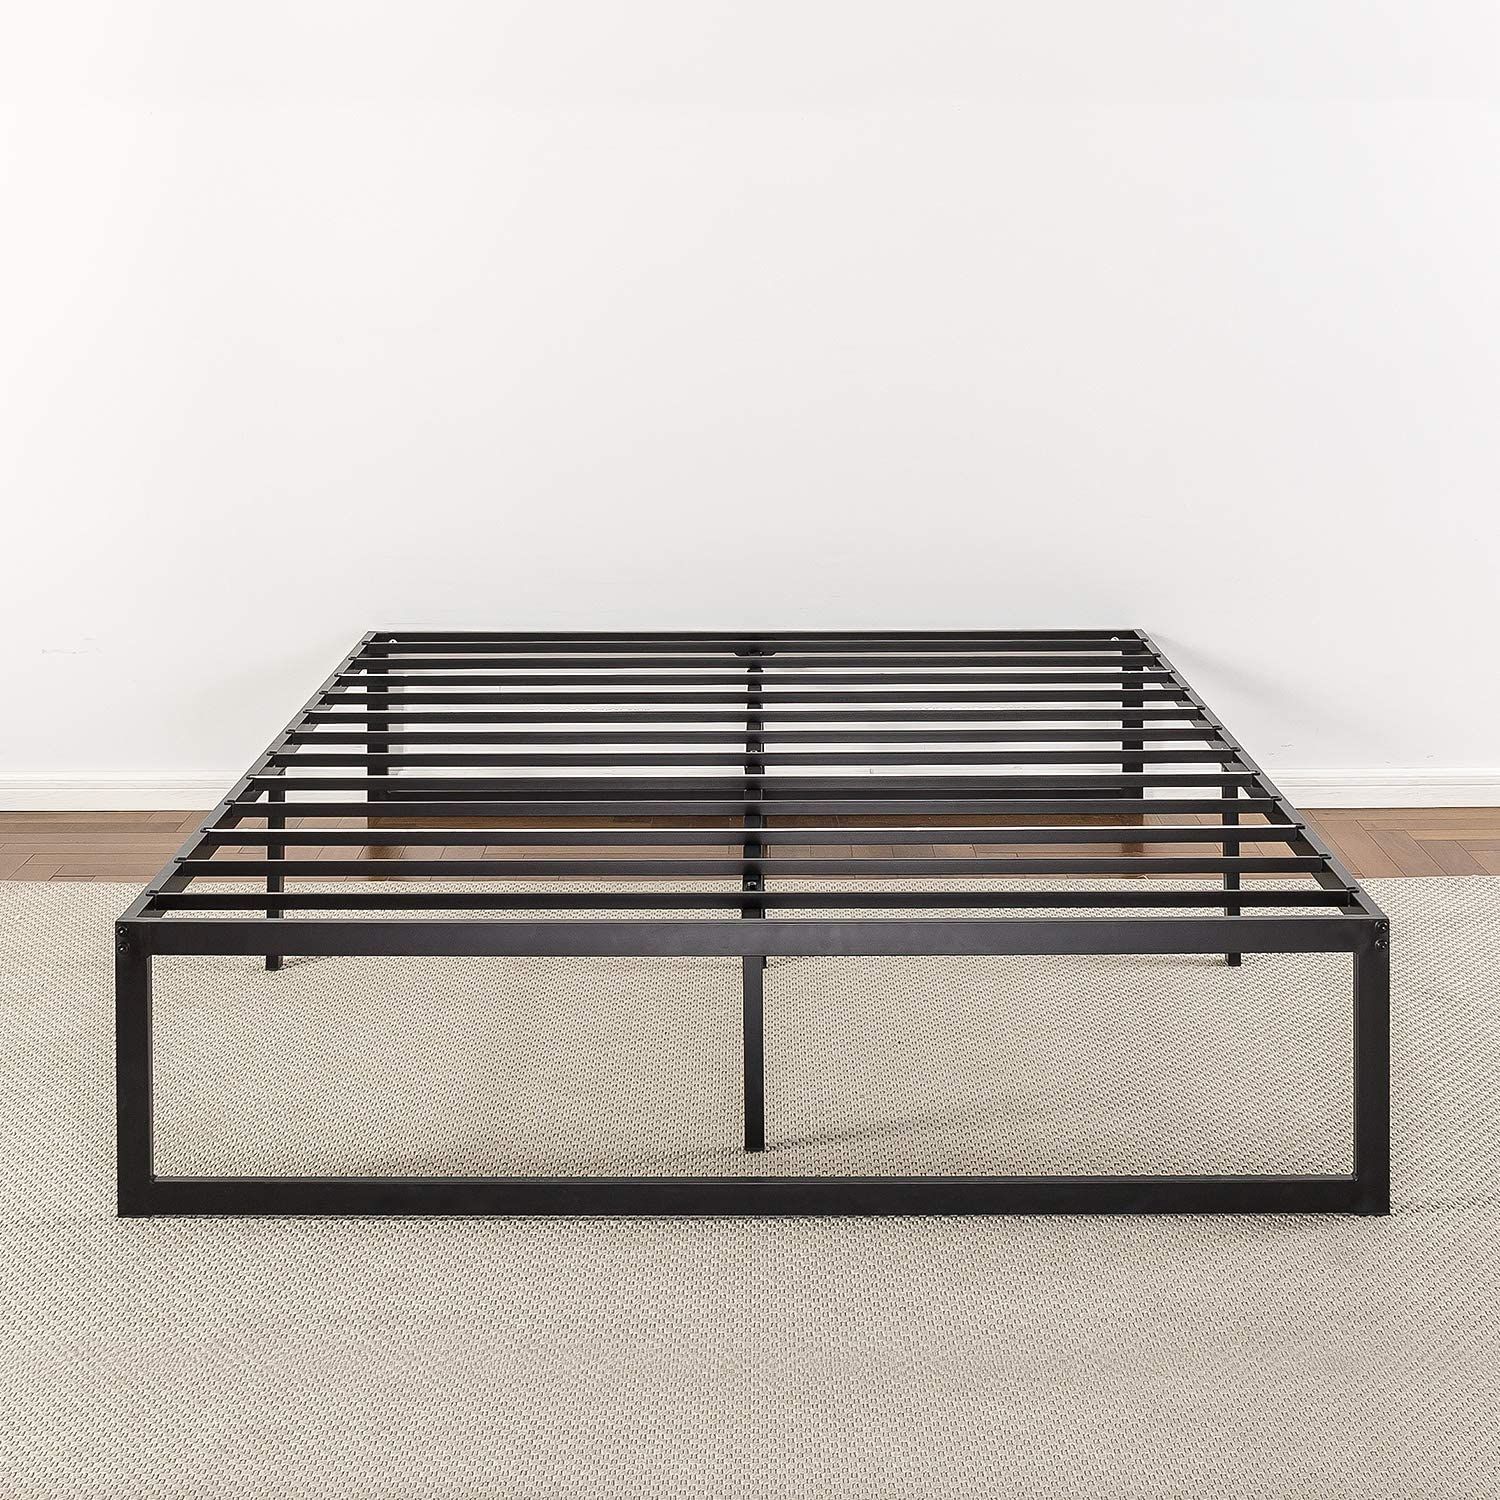 19 Best Metal Bed Frames 2020 The, Metal Bed Frame Extensions